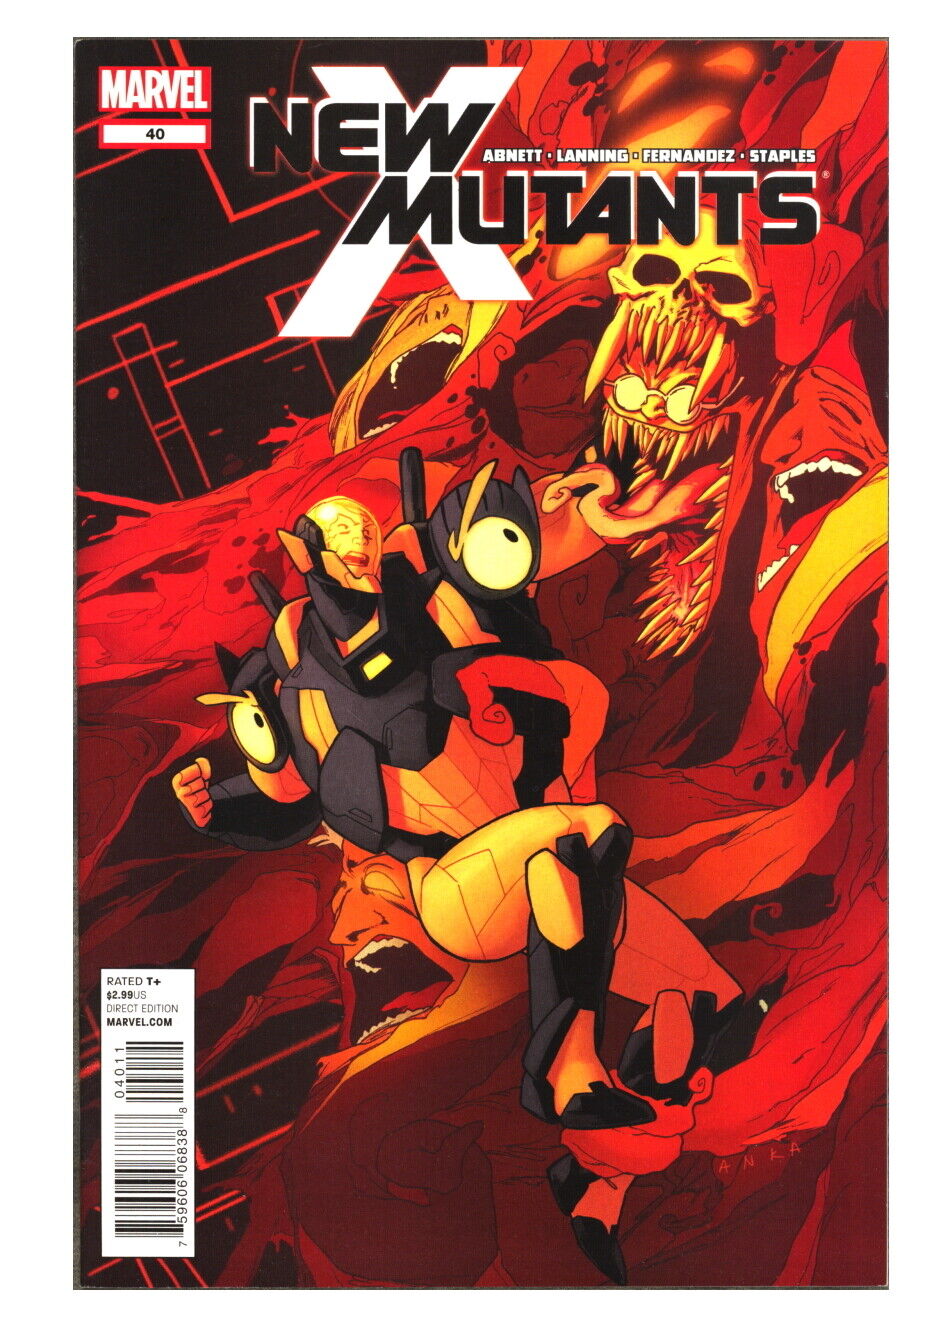 NEW MUTANTS Issue 40 (May, 2012) Marvel Comics X-Men, Abnett, Lanning, Fernandez